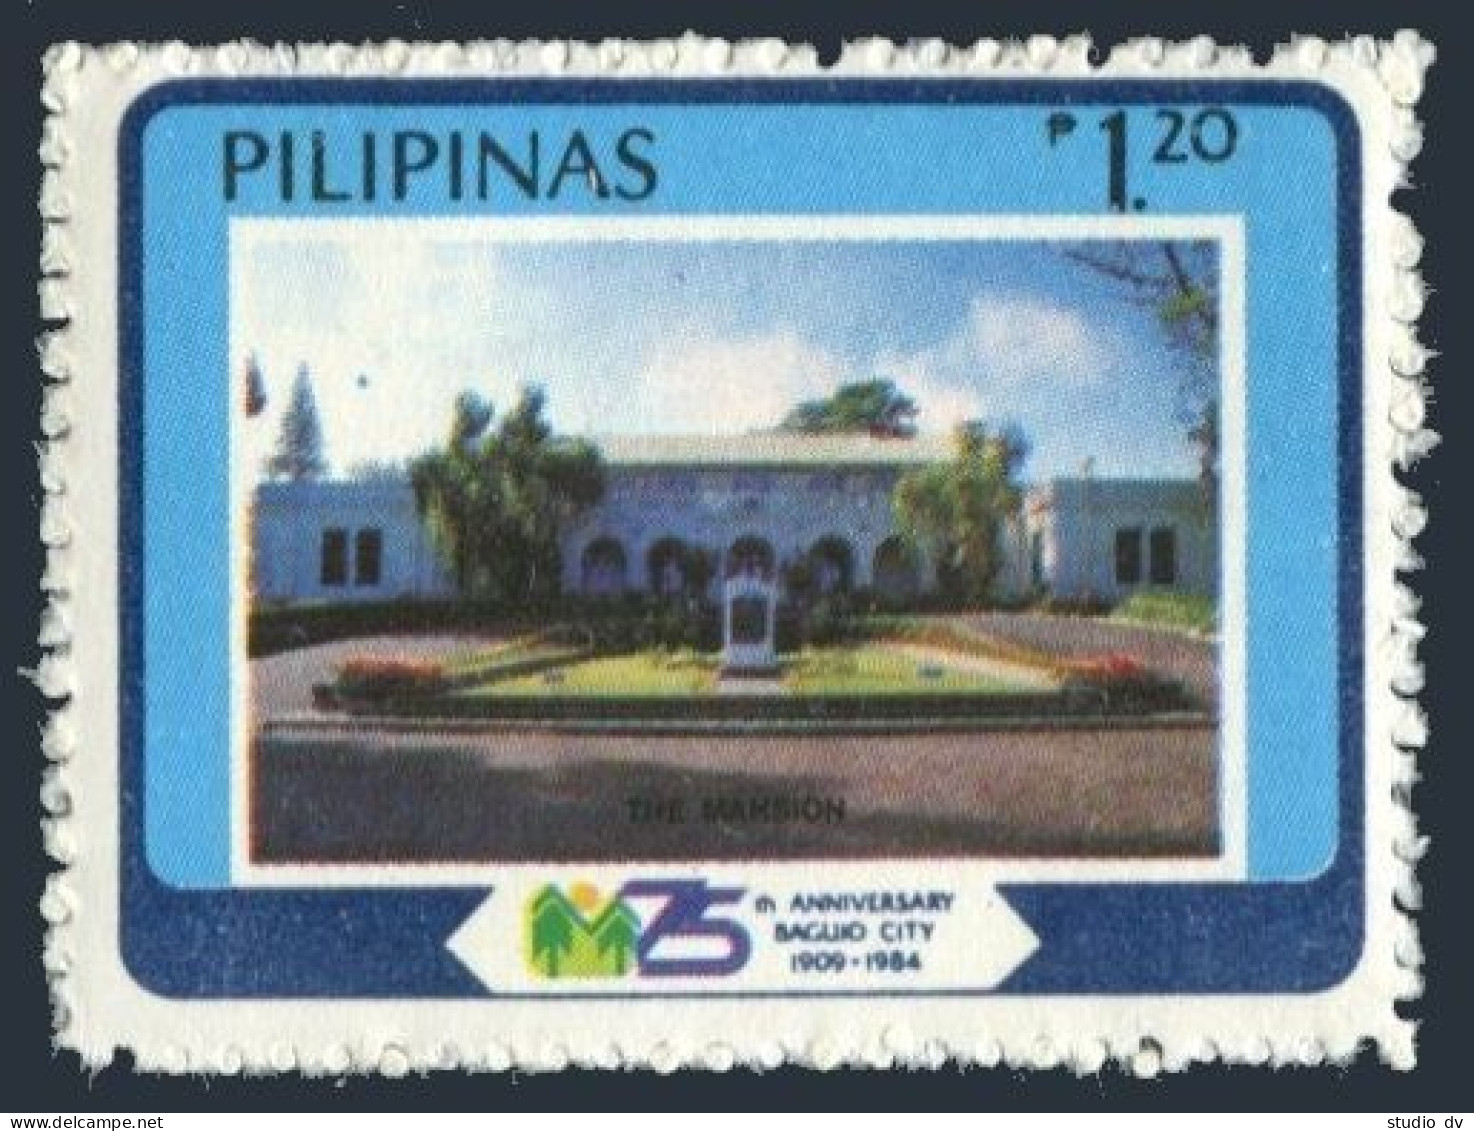 Philippines 1706, MNH. Michel 1616. Baguio City, 75th Ann. 1984. - Filipinas